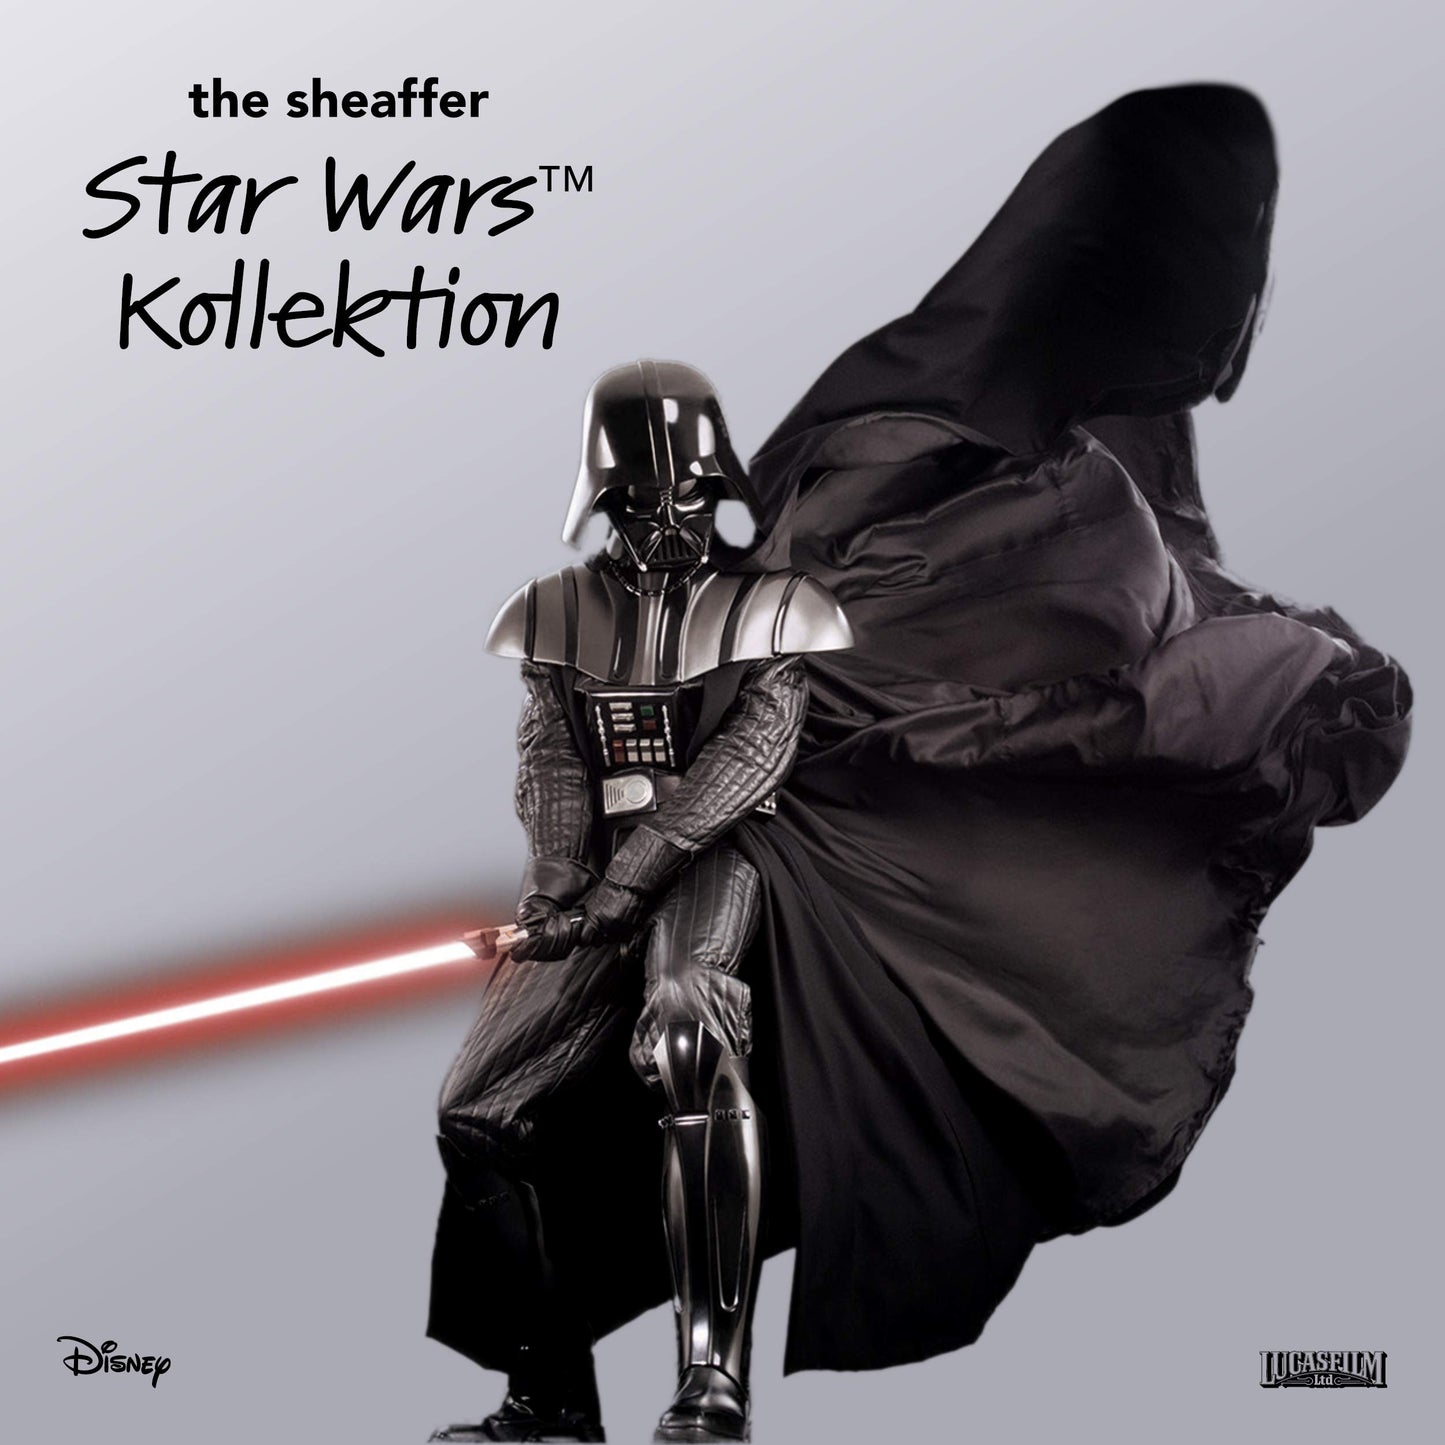 Sheaffer Pop Star Wars Darth Vader with Chrome Trim Gel Rollerball Pen